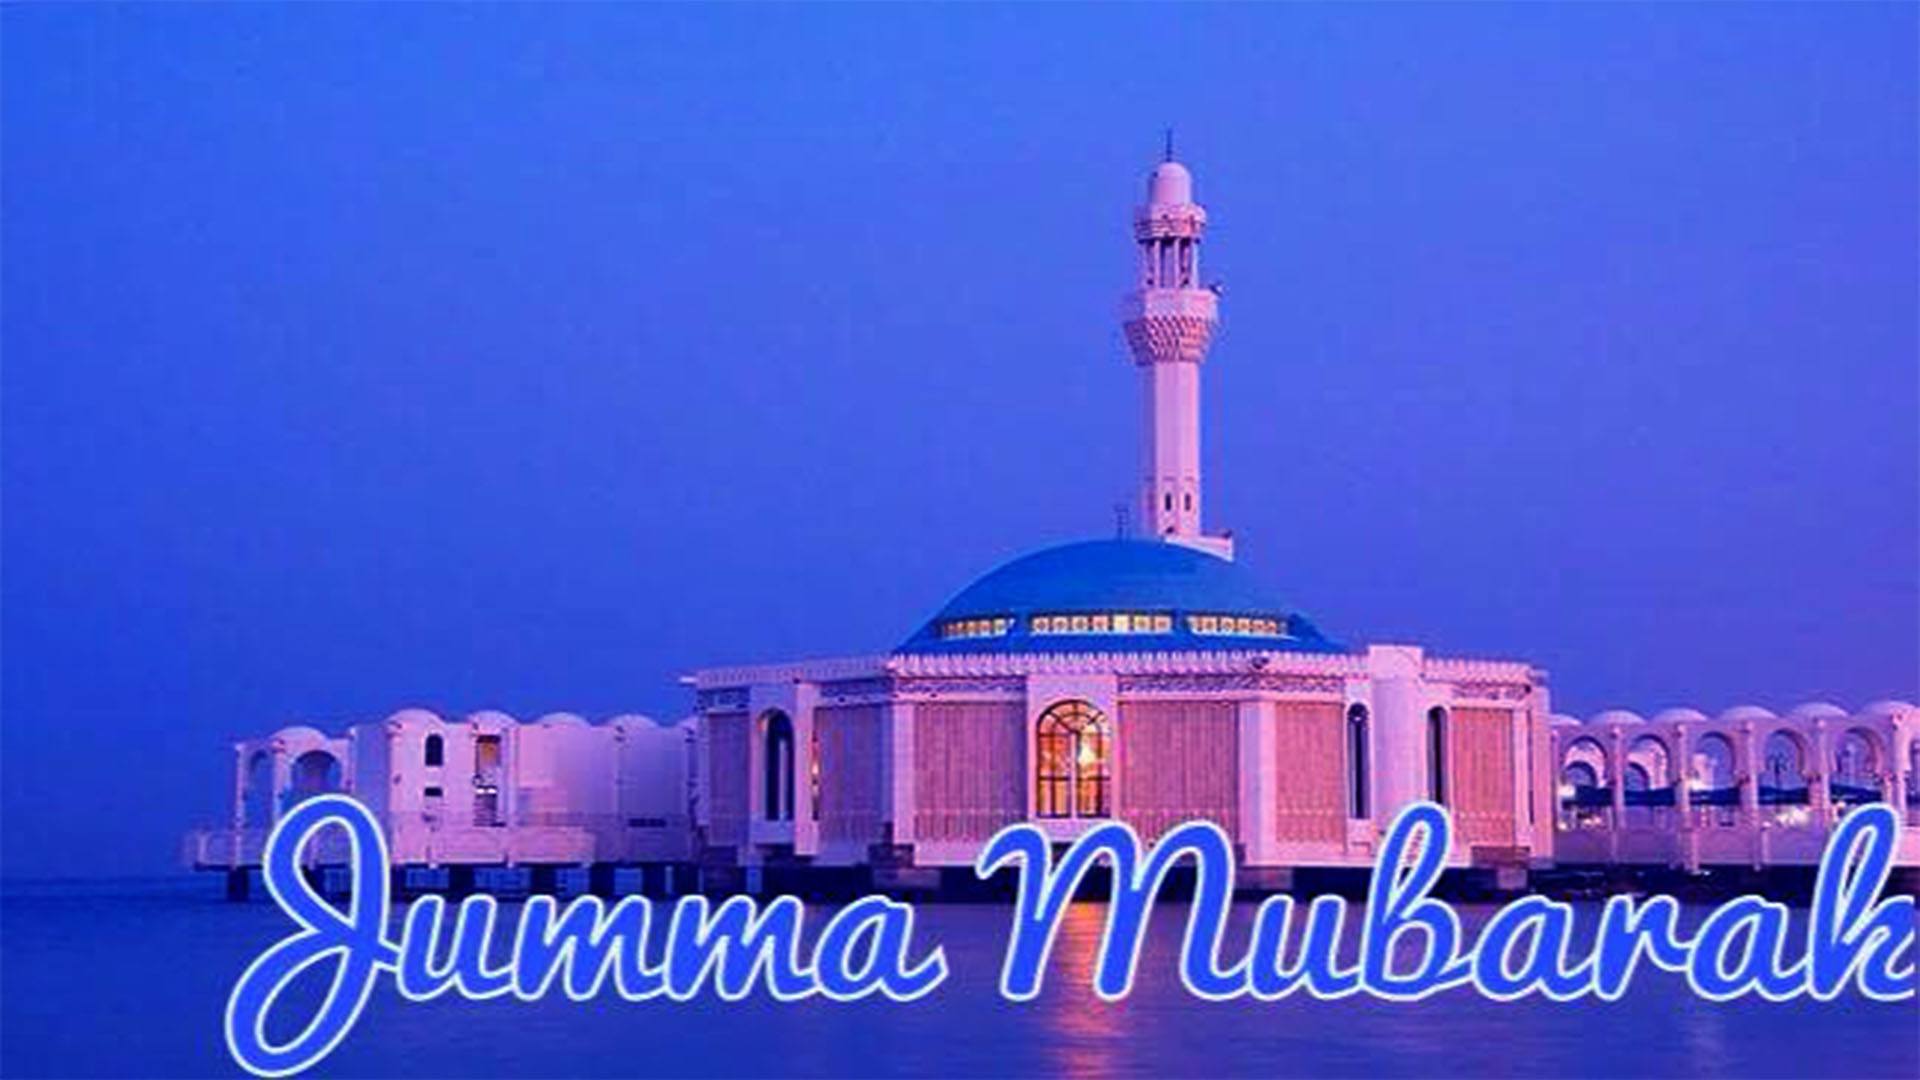 50 Best Jumma Mubarak SMS, Messages and Wallpapers  